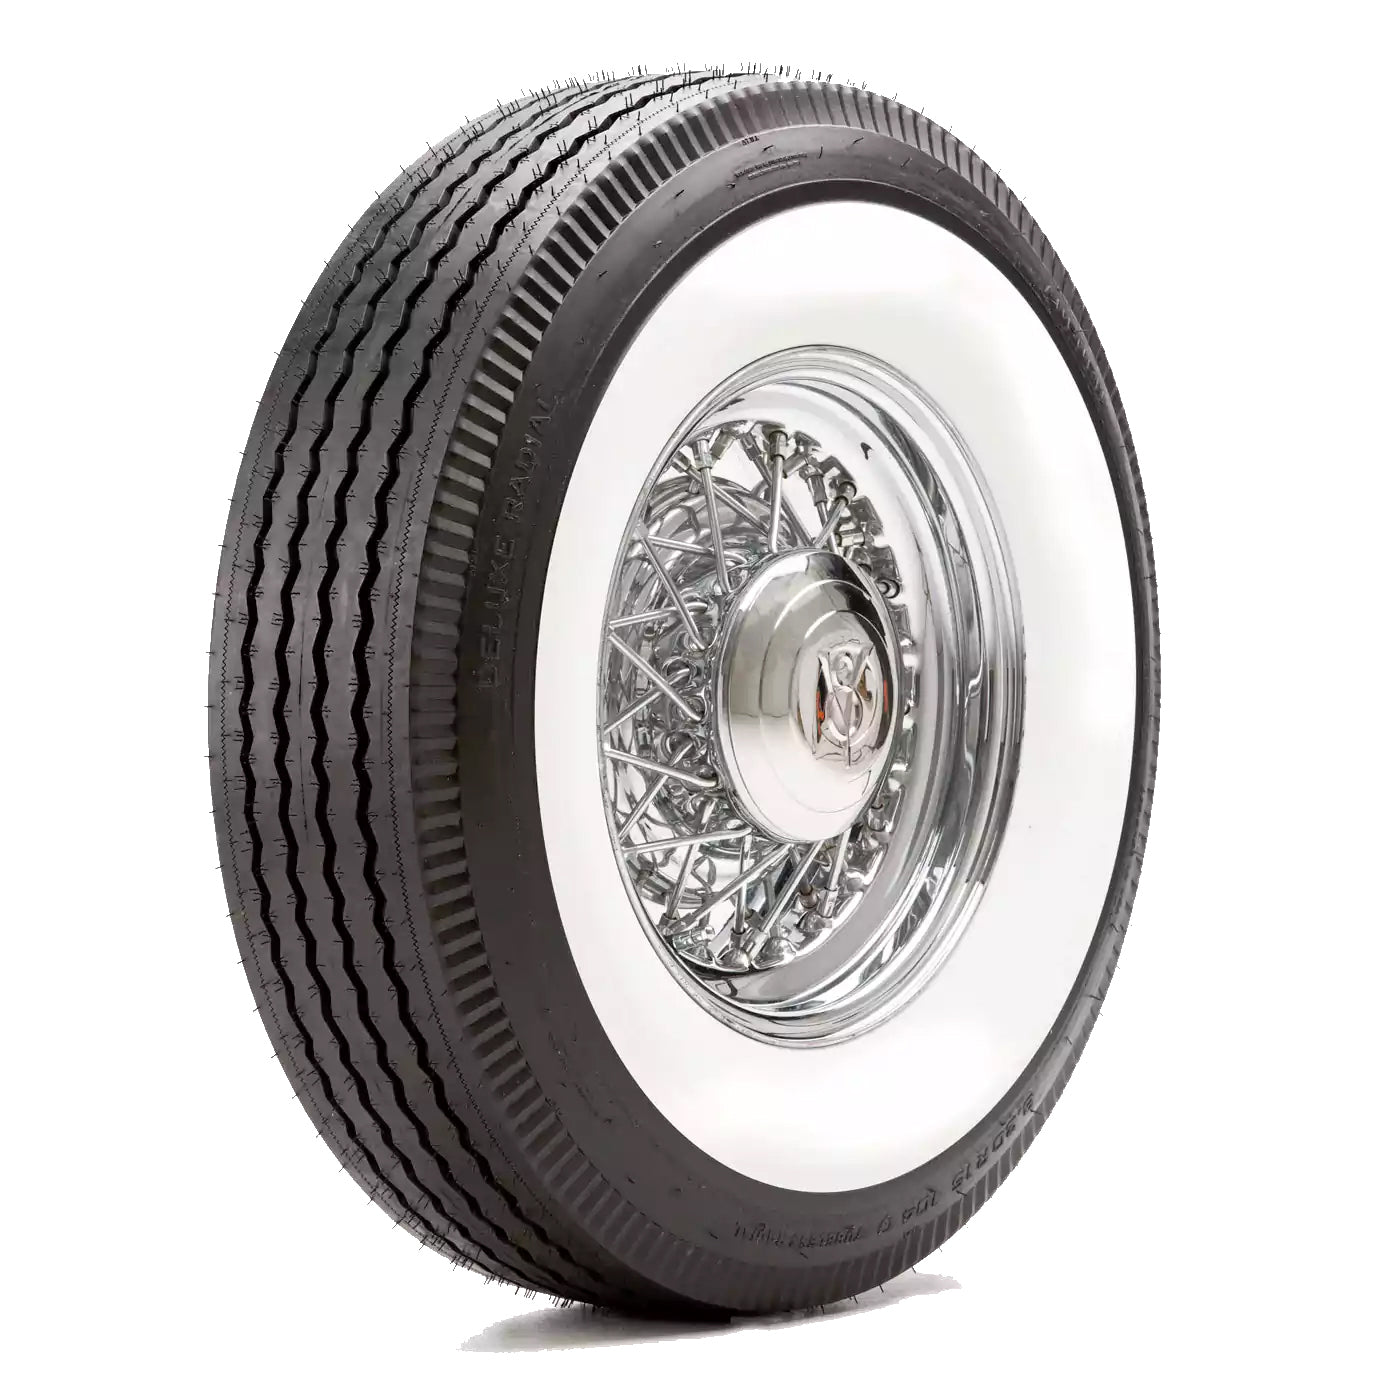 Auburn Radial 3 1/2" Whitewall Tyre - 700R16